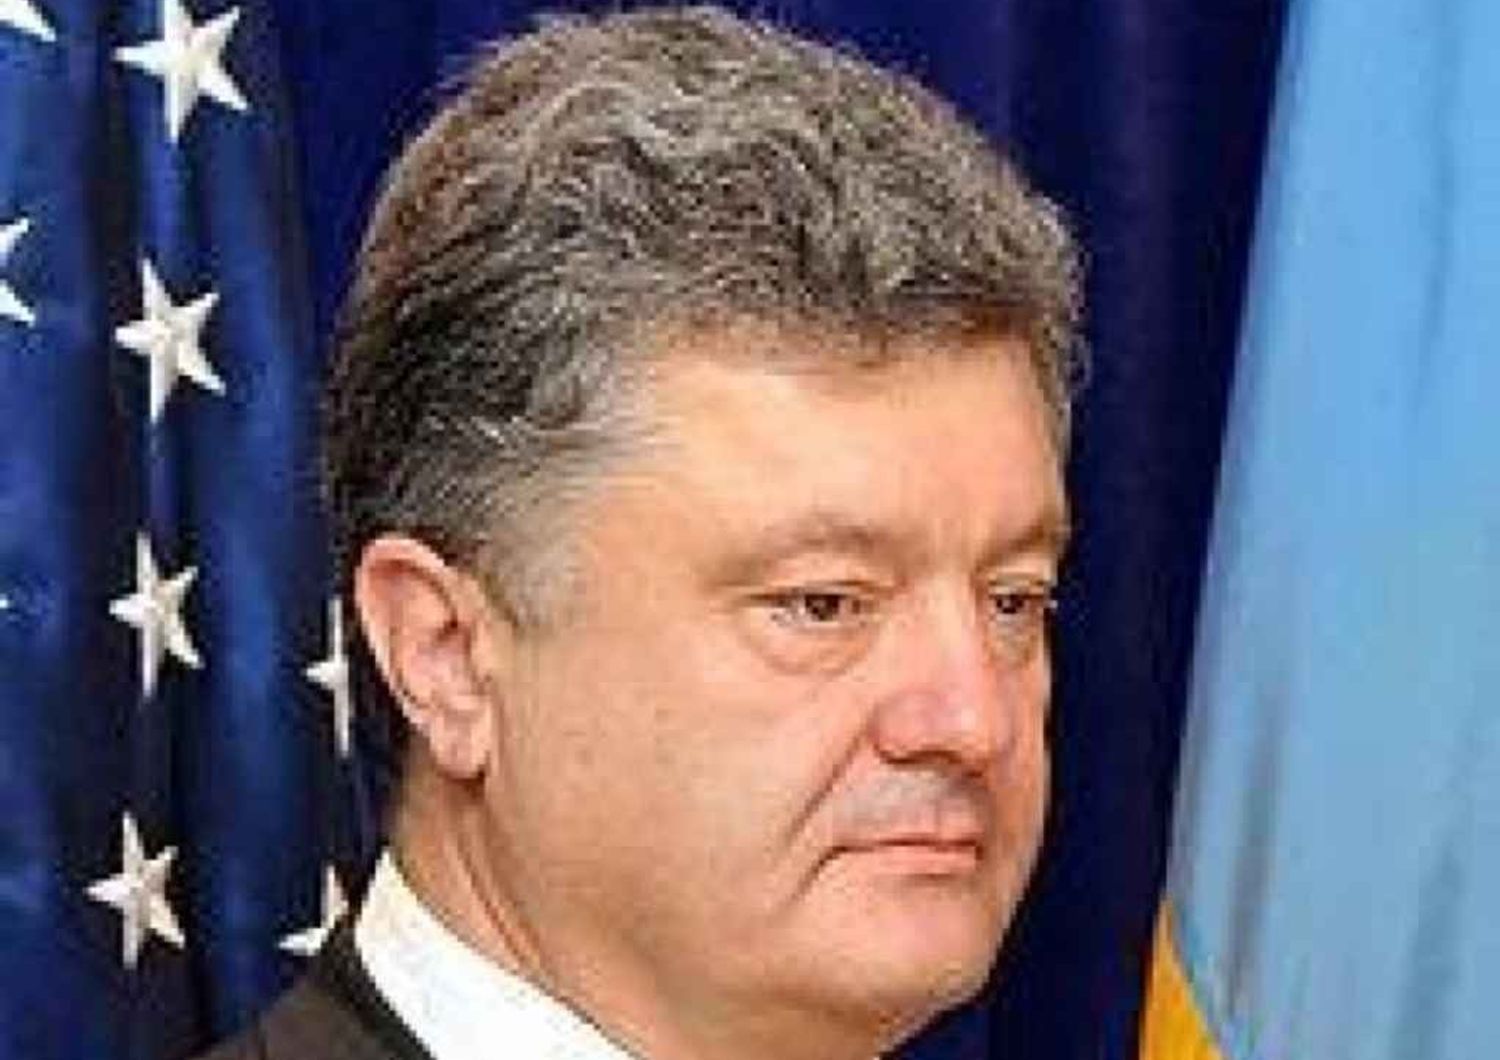 Poroshenko may participate in talks with rebels